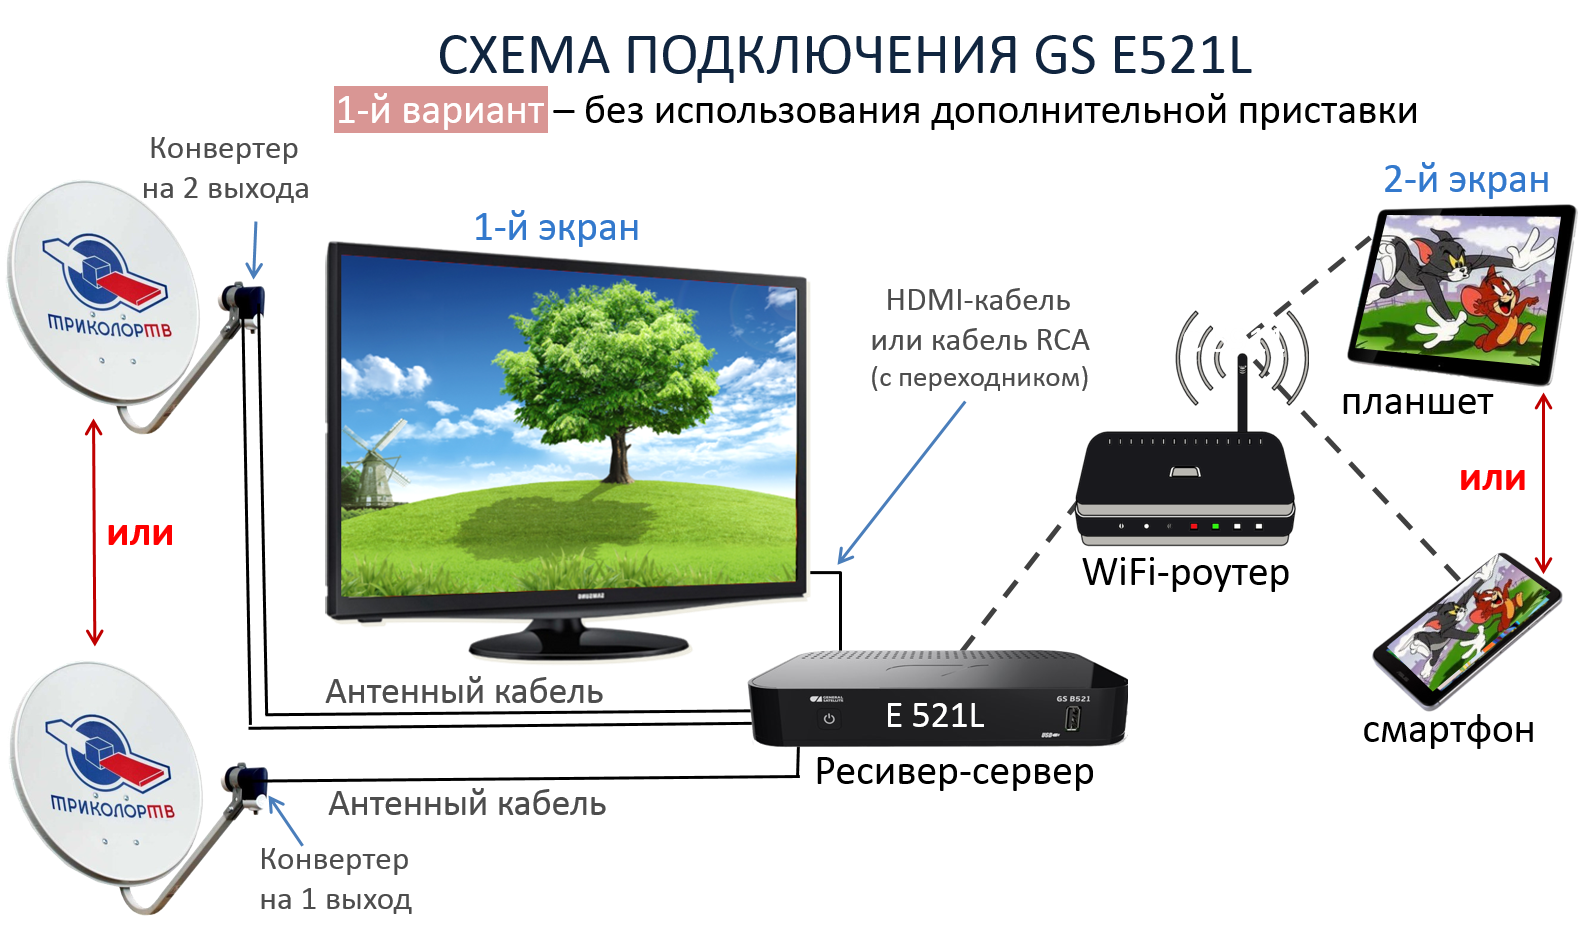 Триколор GS e521l. Схема подключения приемника Триколор на 2 телевизора и 2 приставки. Триколор ТВ приемник GS e521l. Схема подключения спутникового ТВ Триколор. Триколор можно подключить интернет